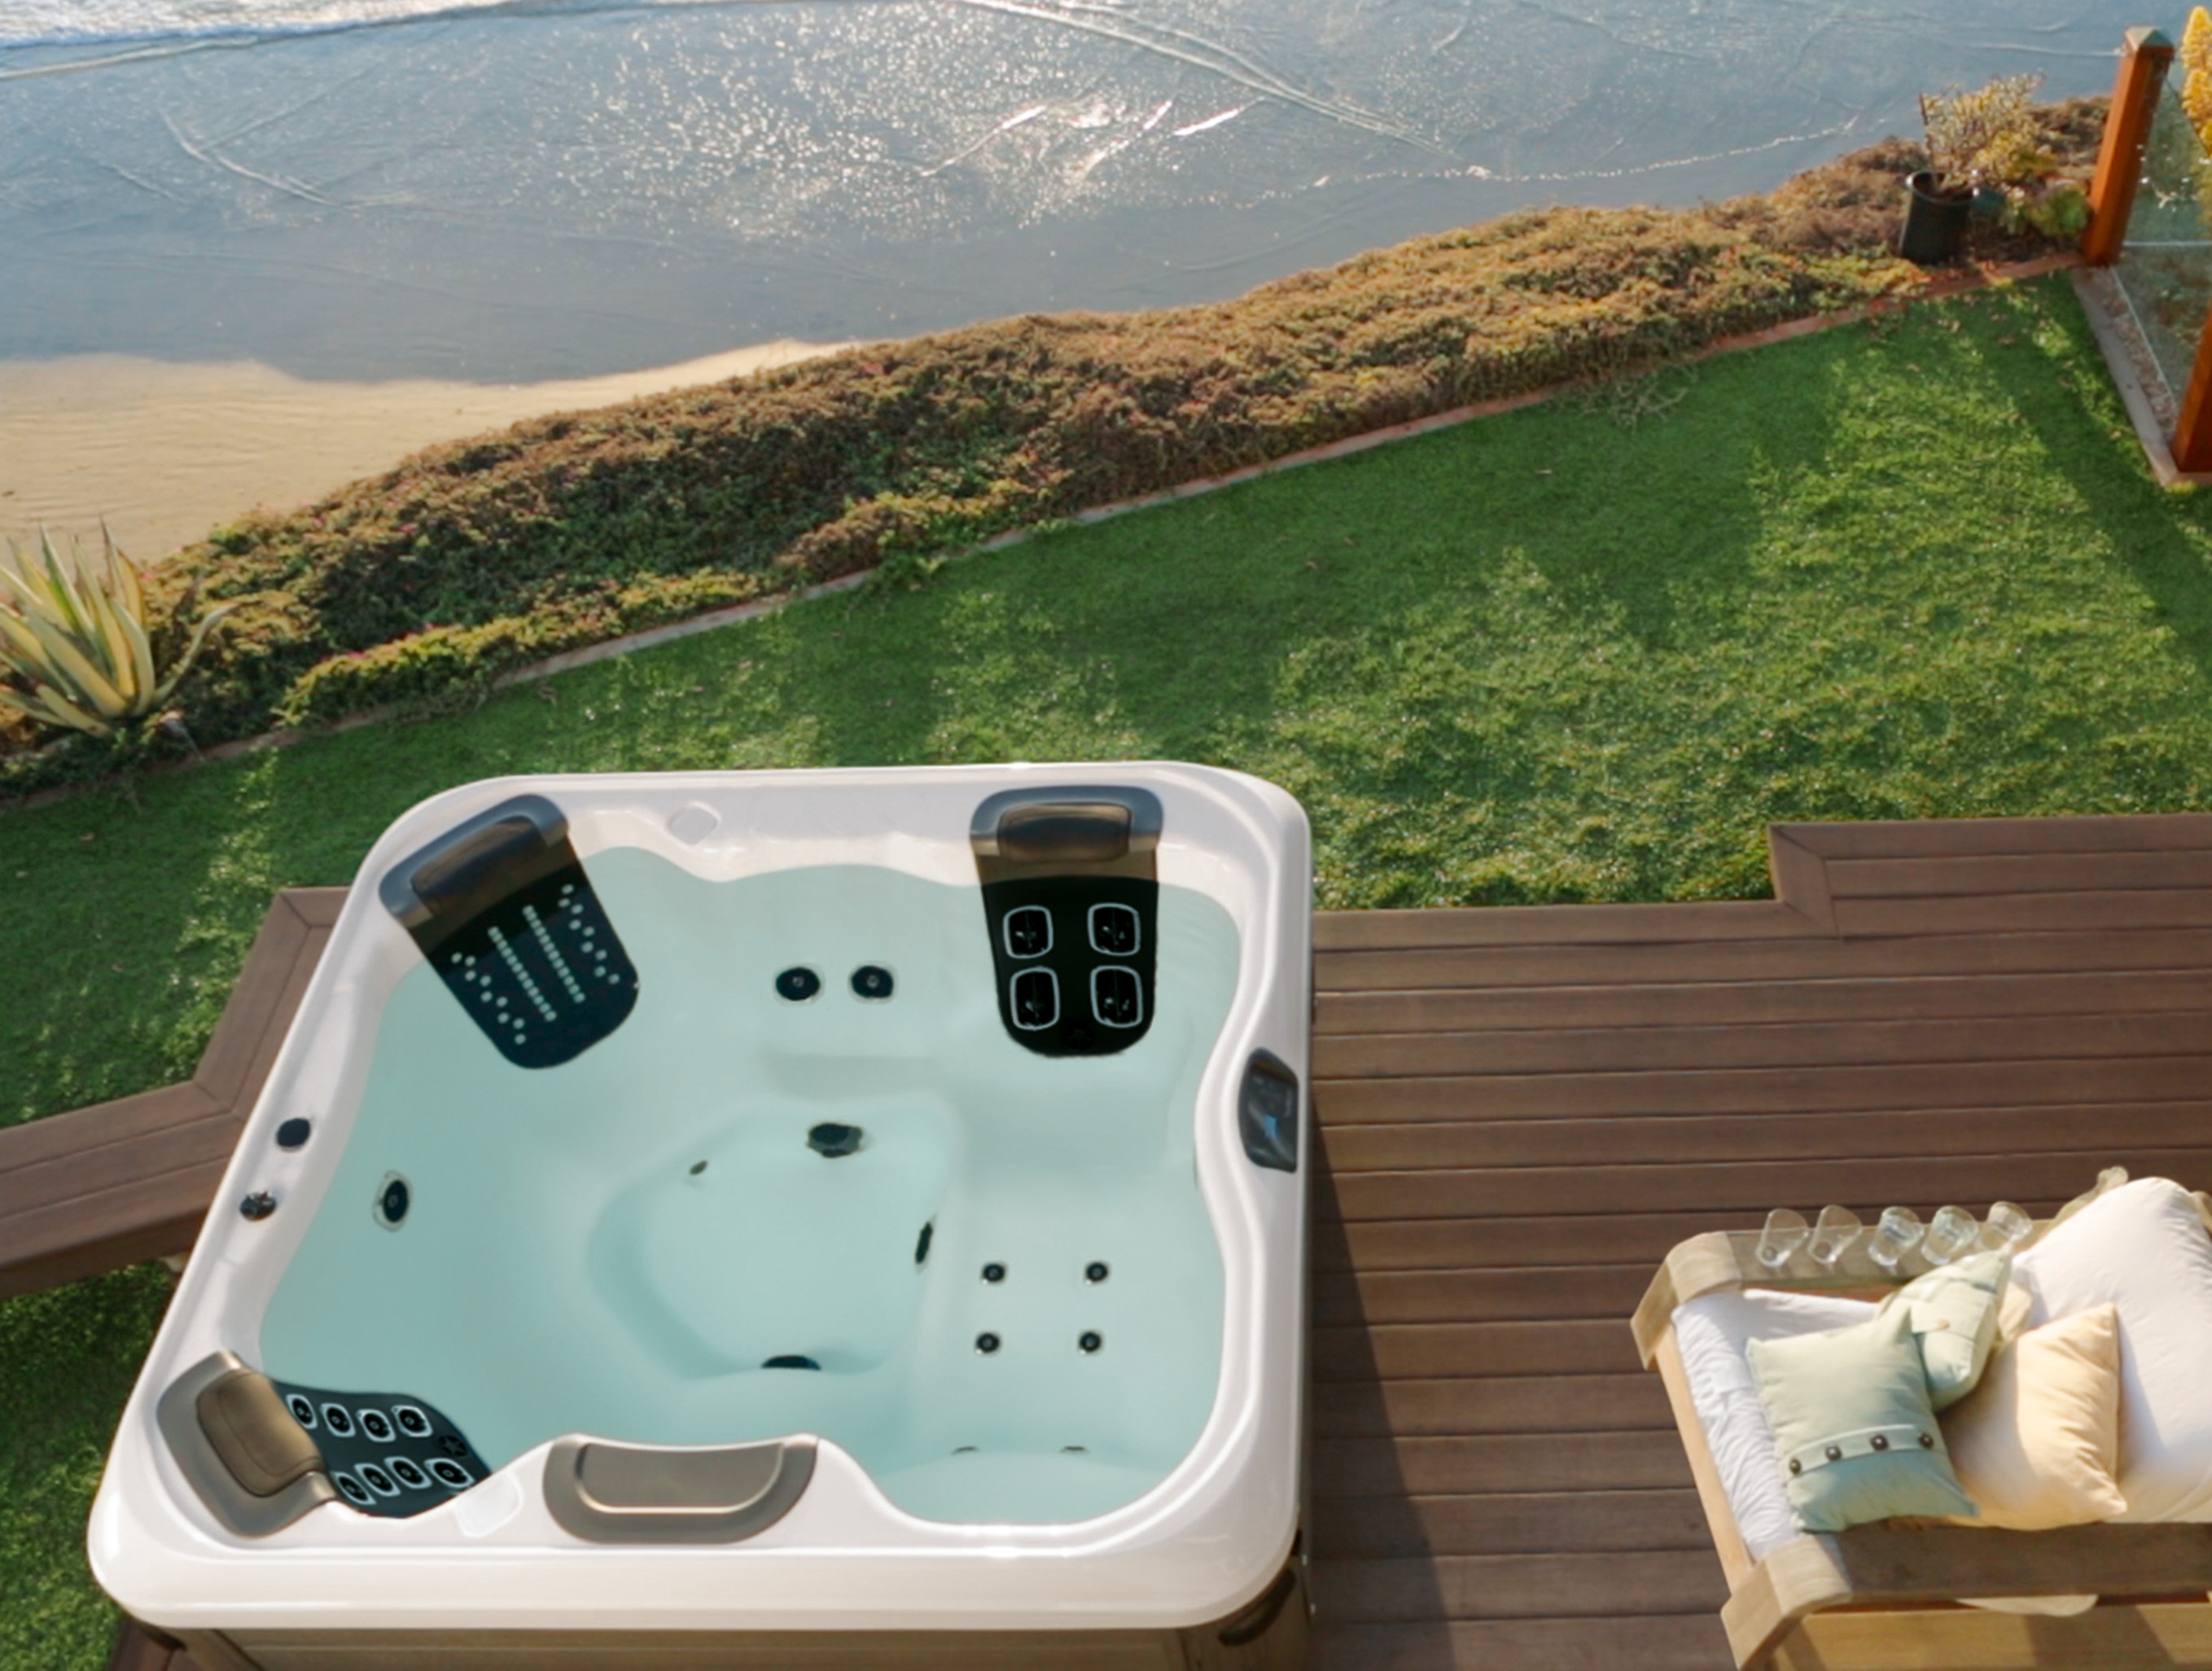 Luxury! Villa aan zee met outdoor whirlpool-spa op terras. Black & White Edition van Villeroy & Boch